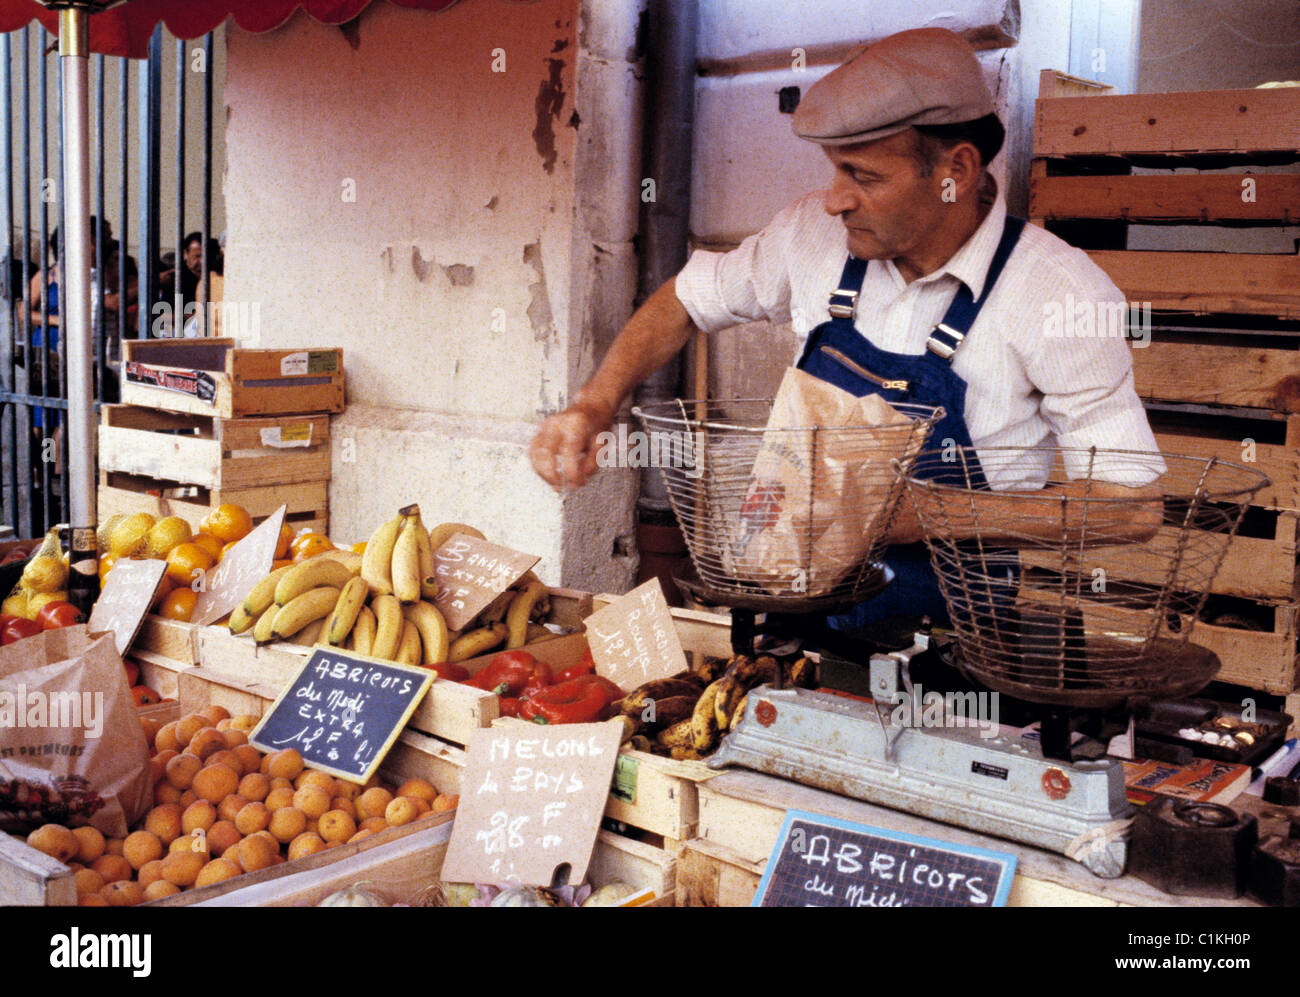 Fruit seller at market stall in Miramont, France. Stock Photo